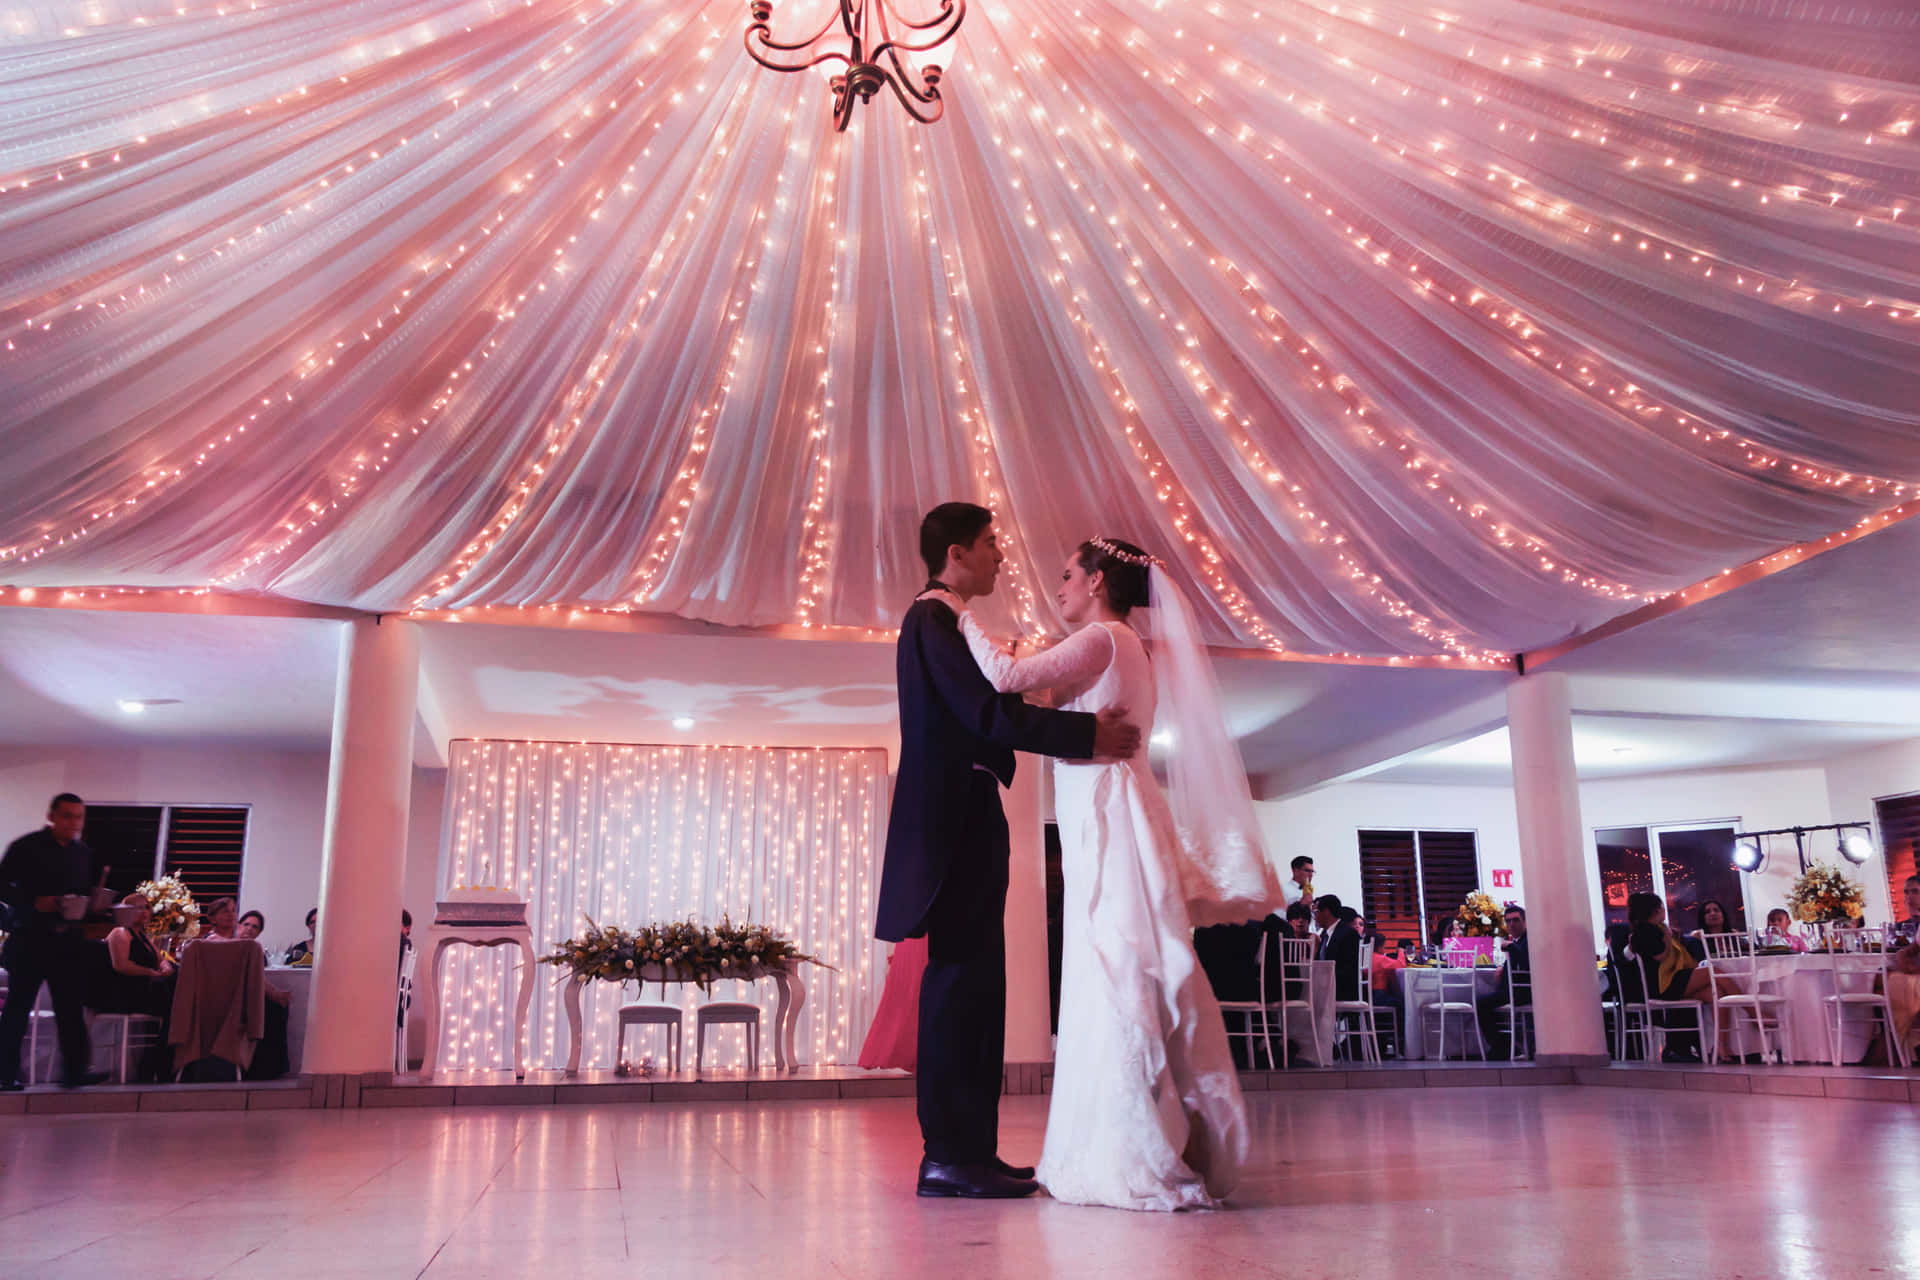 A Bride And Groom Dancing In A Wedding Reception